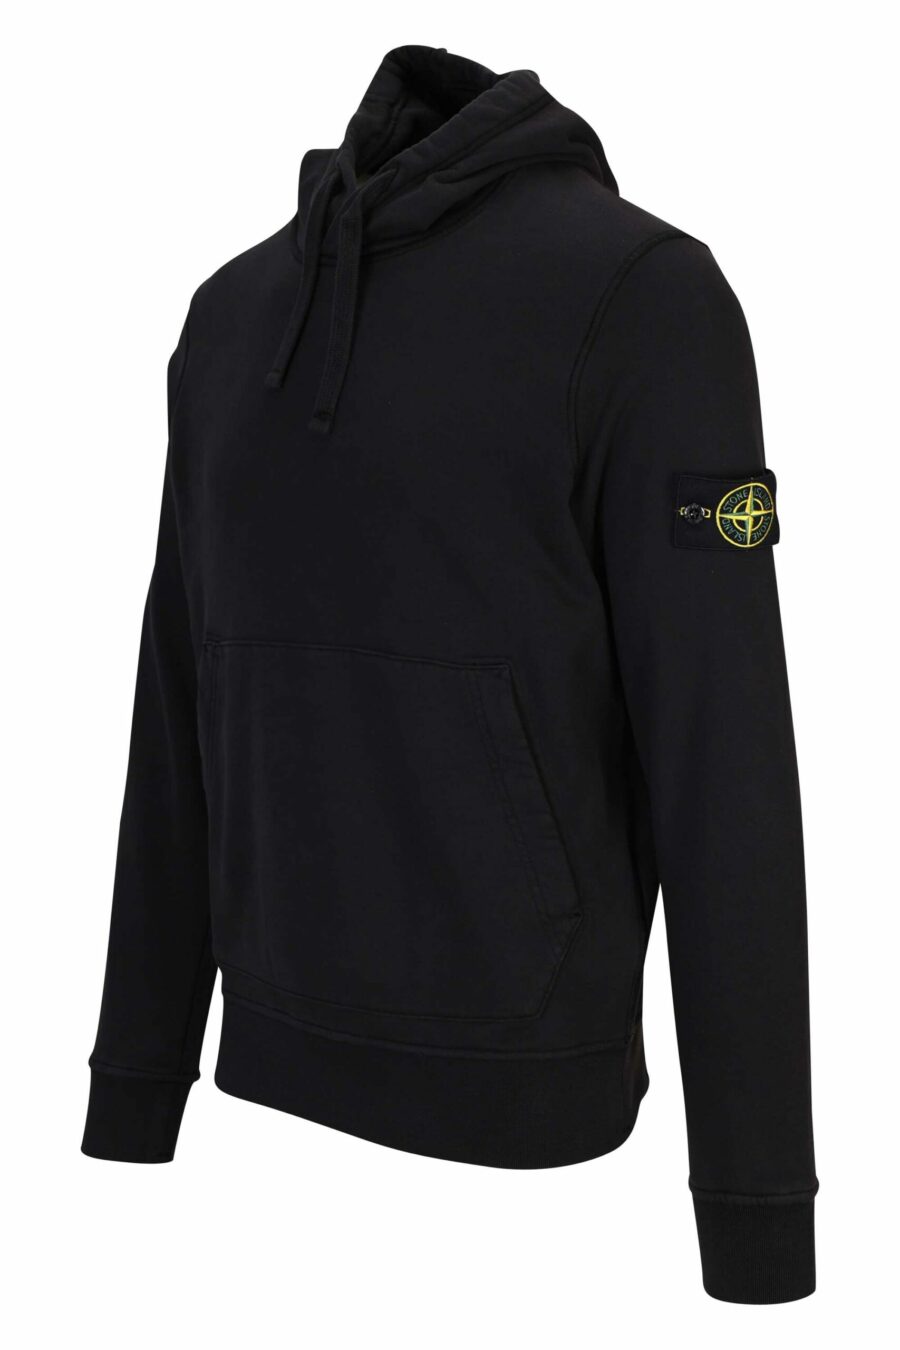 Schwarzes Kapuzensweatshirt mit Kompass-Logoaufnäher - 8052572852626 1 skaliert